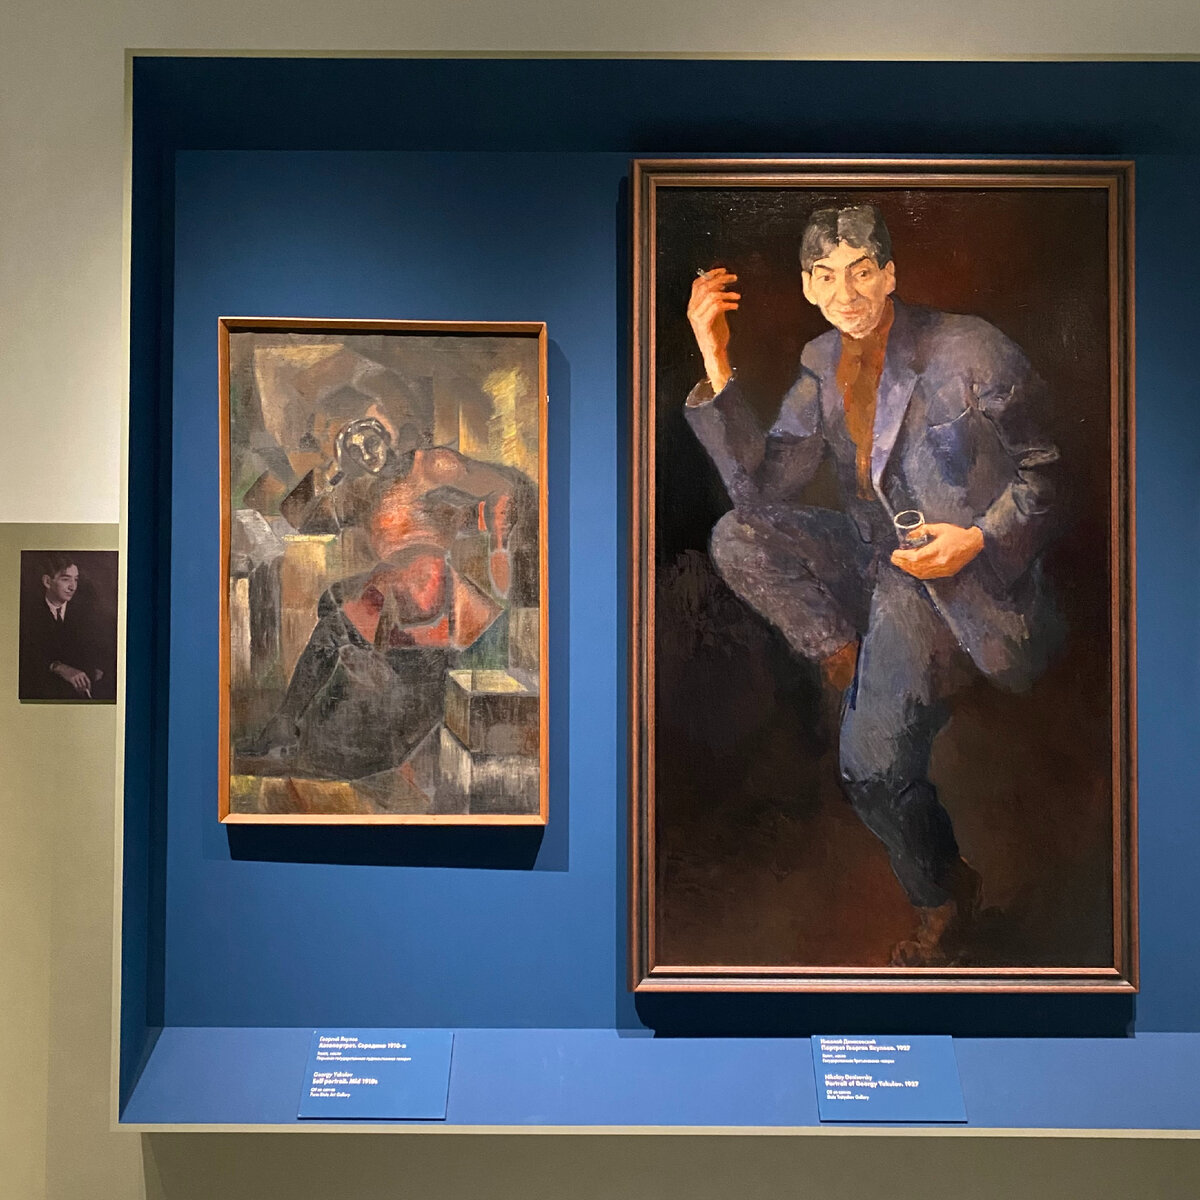 Фото автора. Музей Русского импрессионизма. Слева - автопортрет.